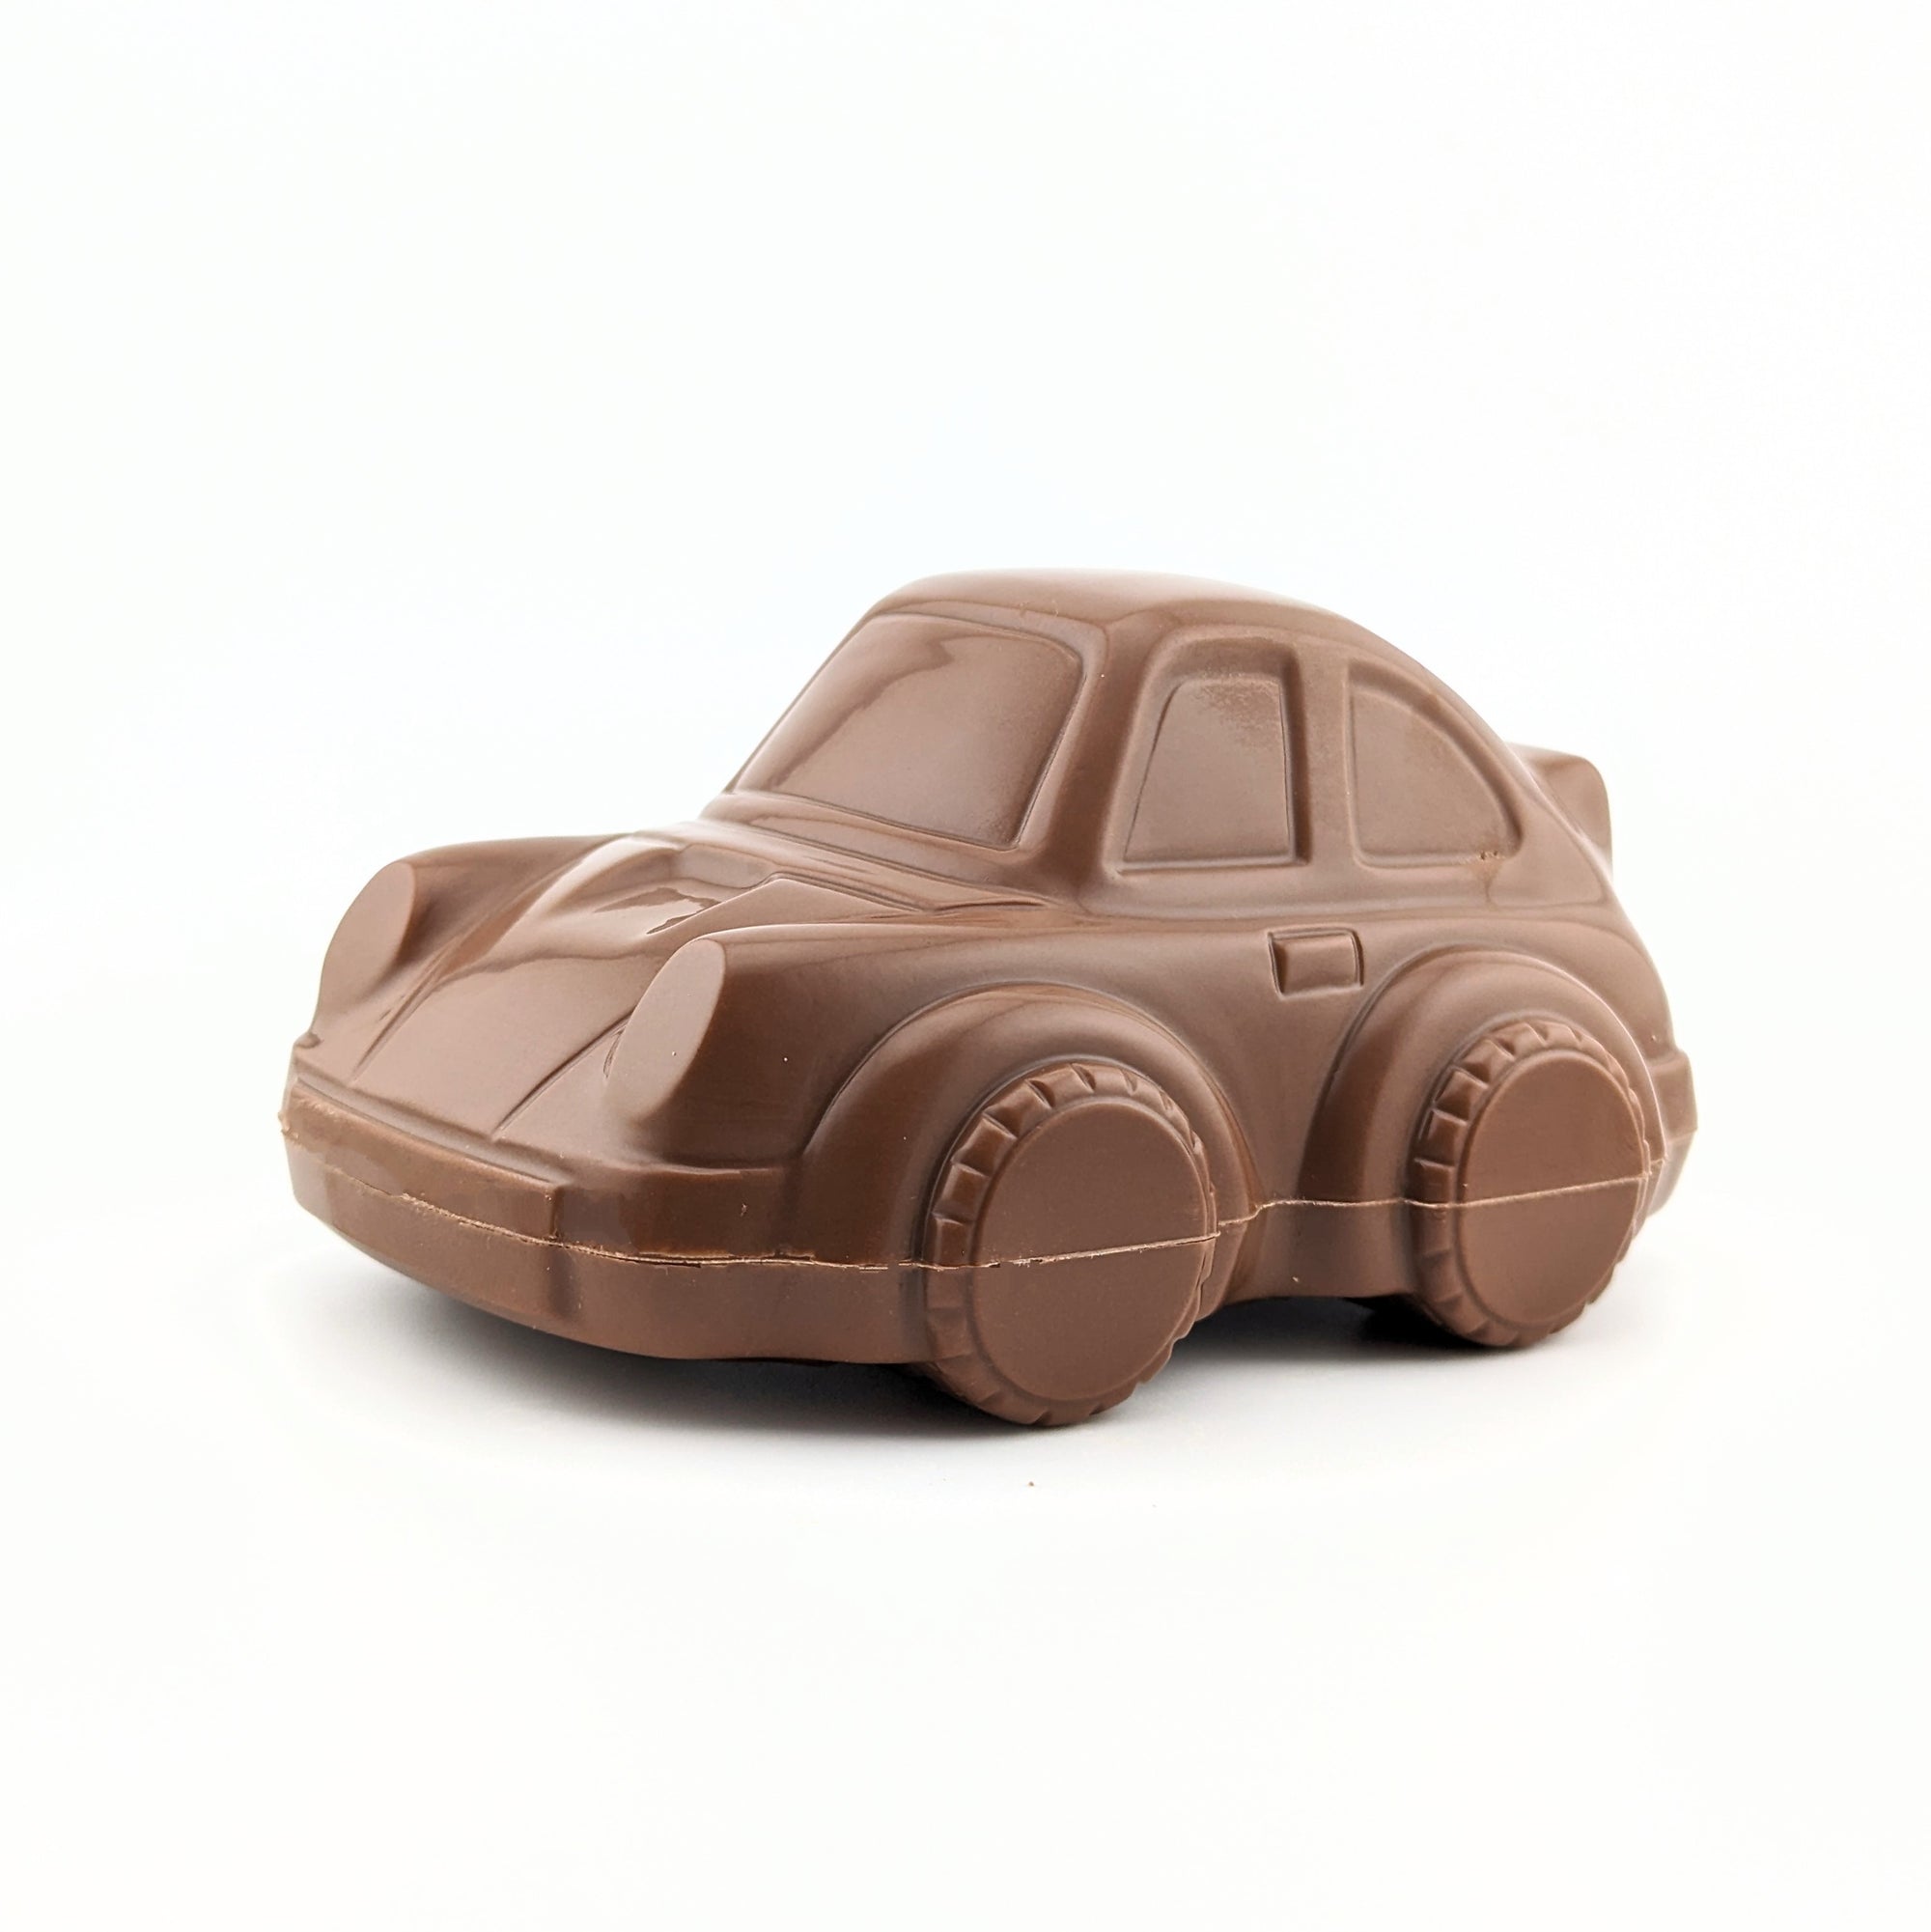 Luxury Belgian Chocolate Car